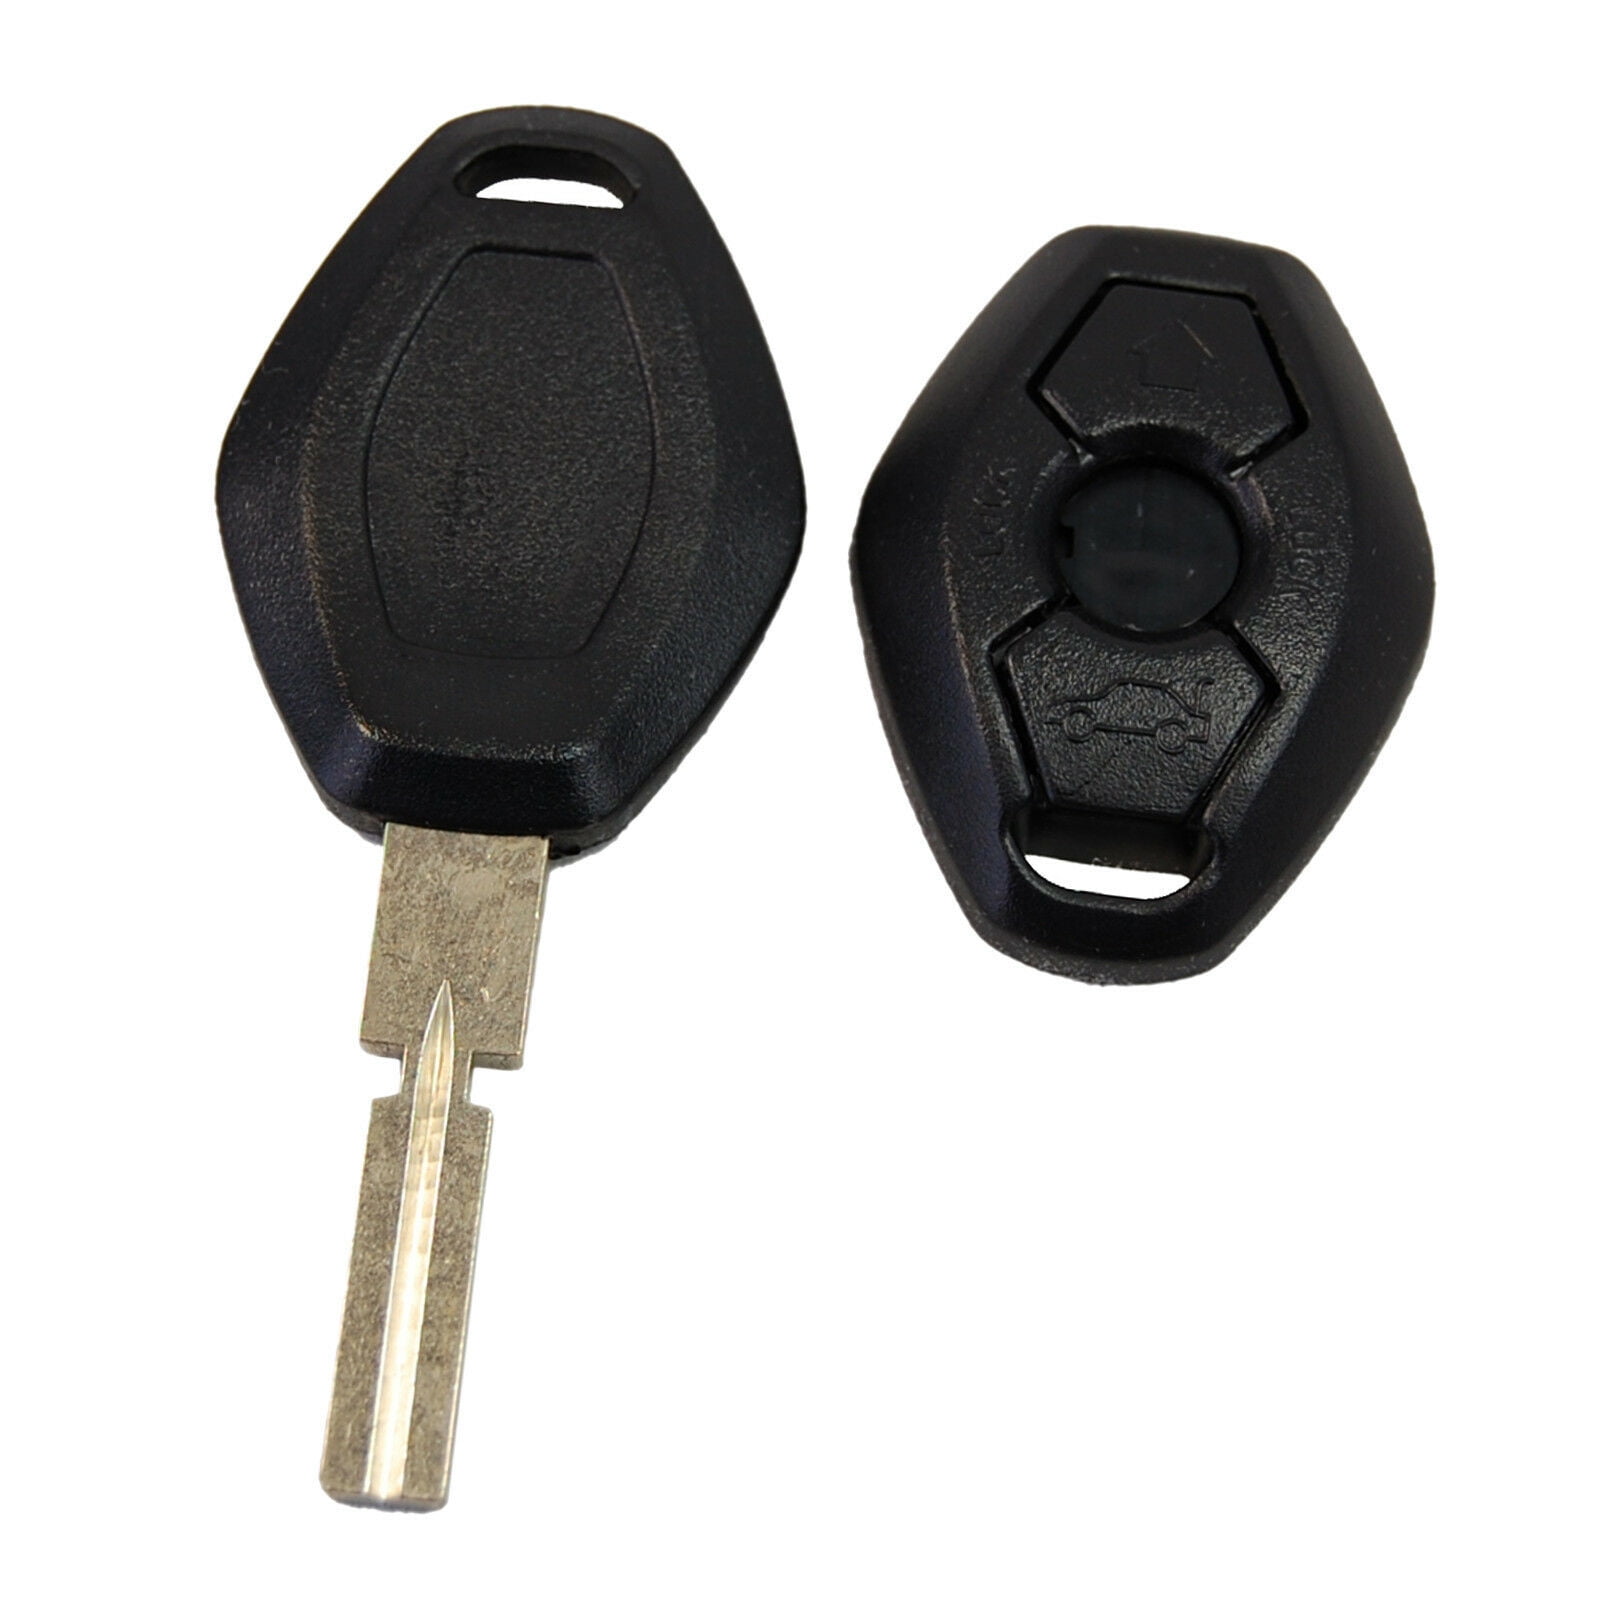 QINCHYE 1 Keyless Entry Remote Control Car Key Fob Fits for BMW 325Ci 330Ci 330xi 2001-2005 for BMW 325i 325xi 2001-2004 for BMW 330i 2001-2003 for BMW 540i 1999-2003 3 Buttons Black Replace LX8